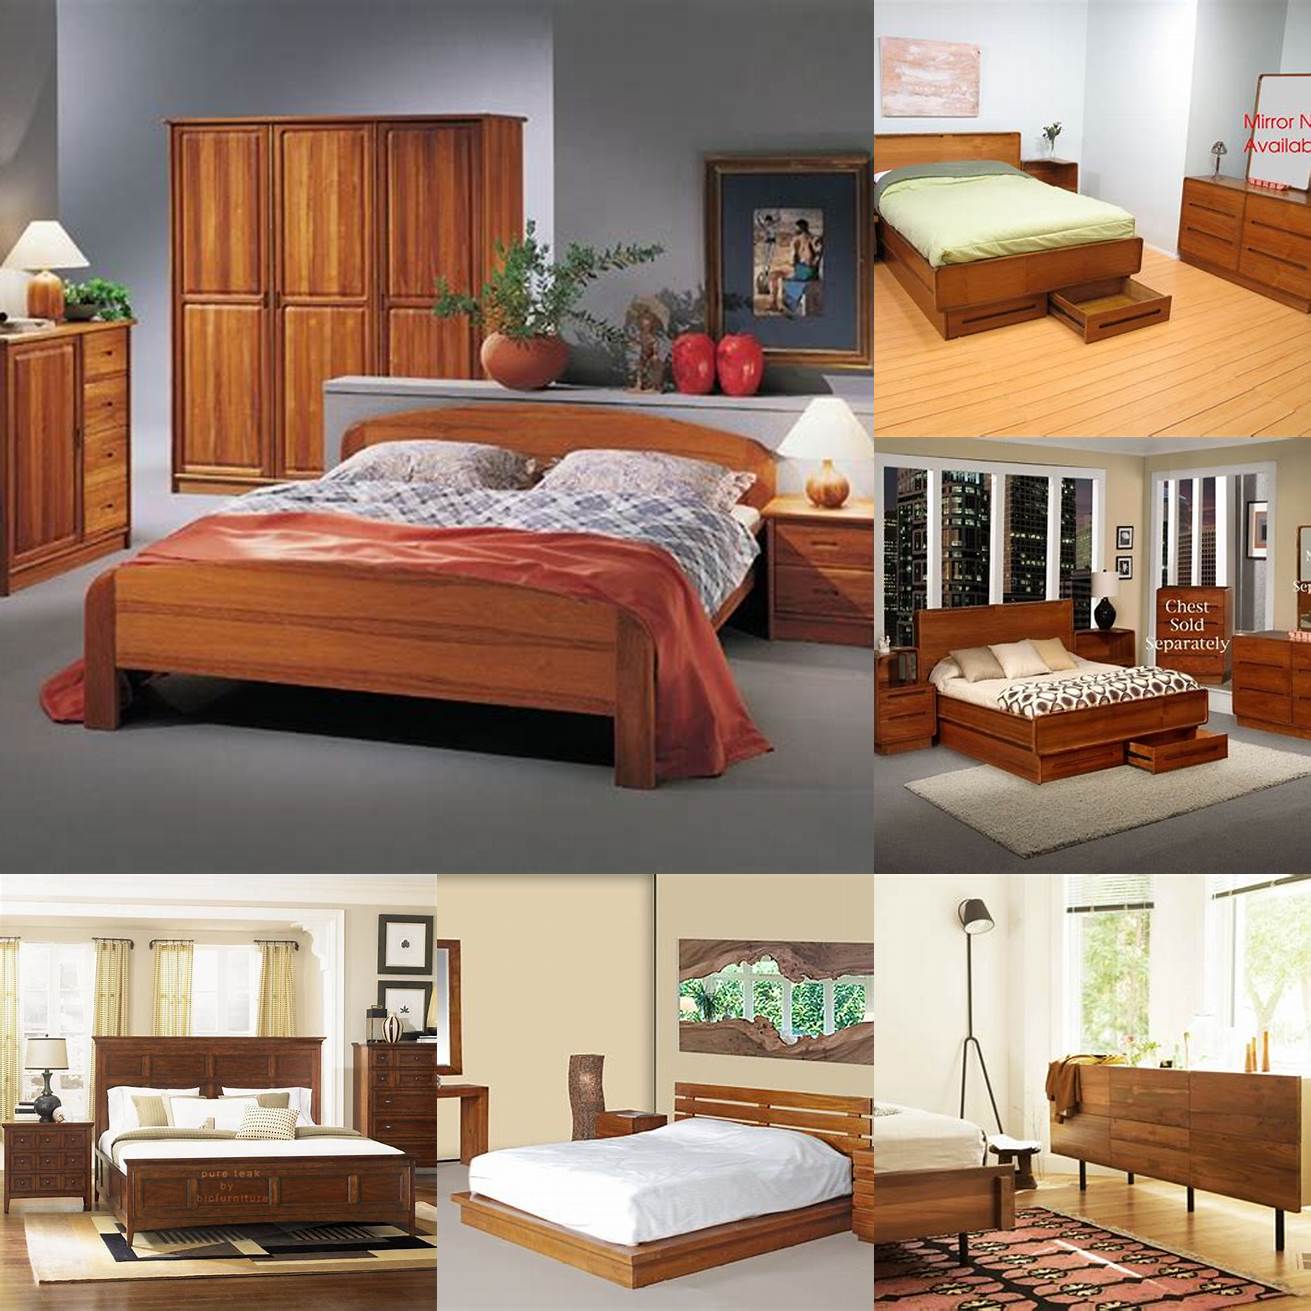 Finding deals on teak bedroom furniture